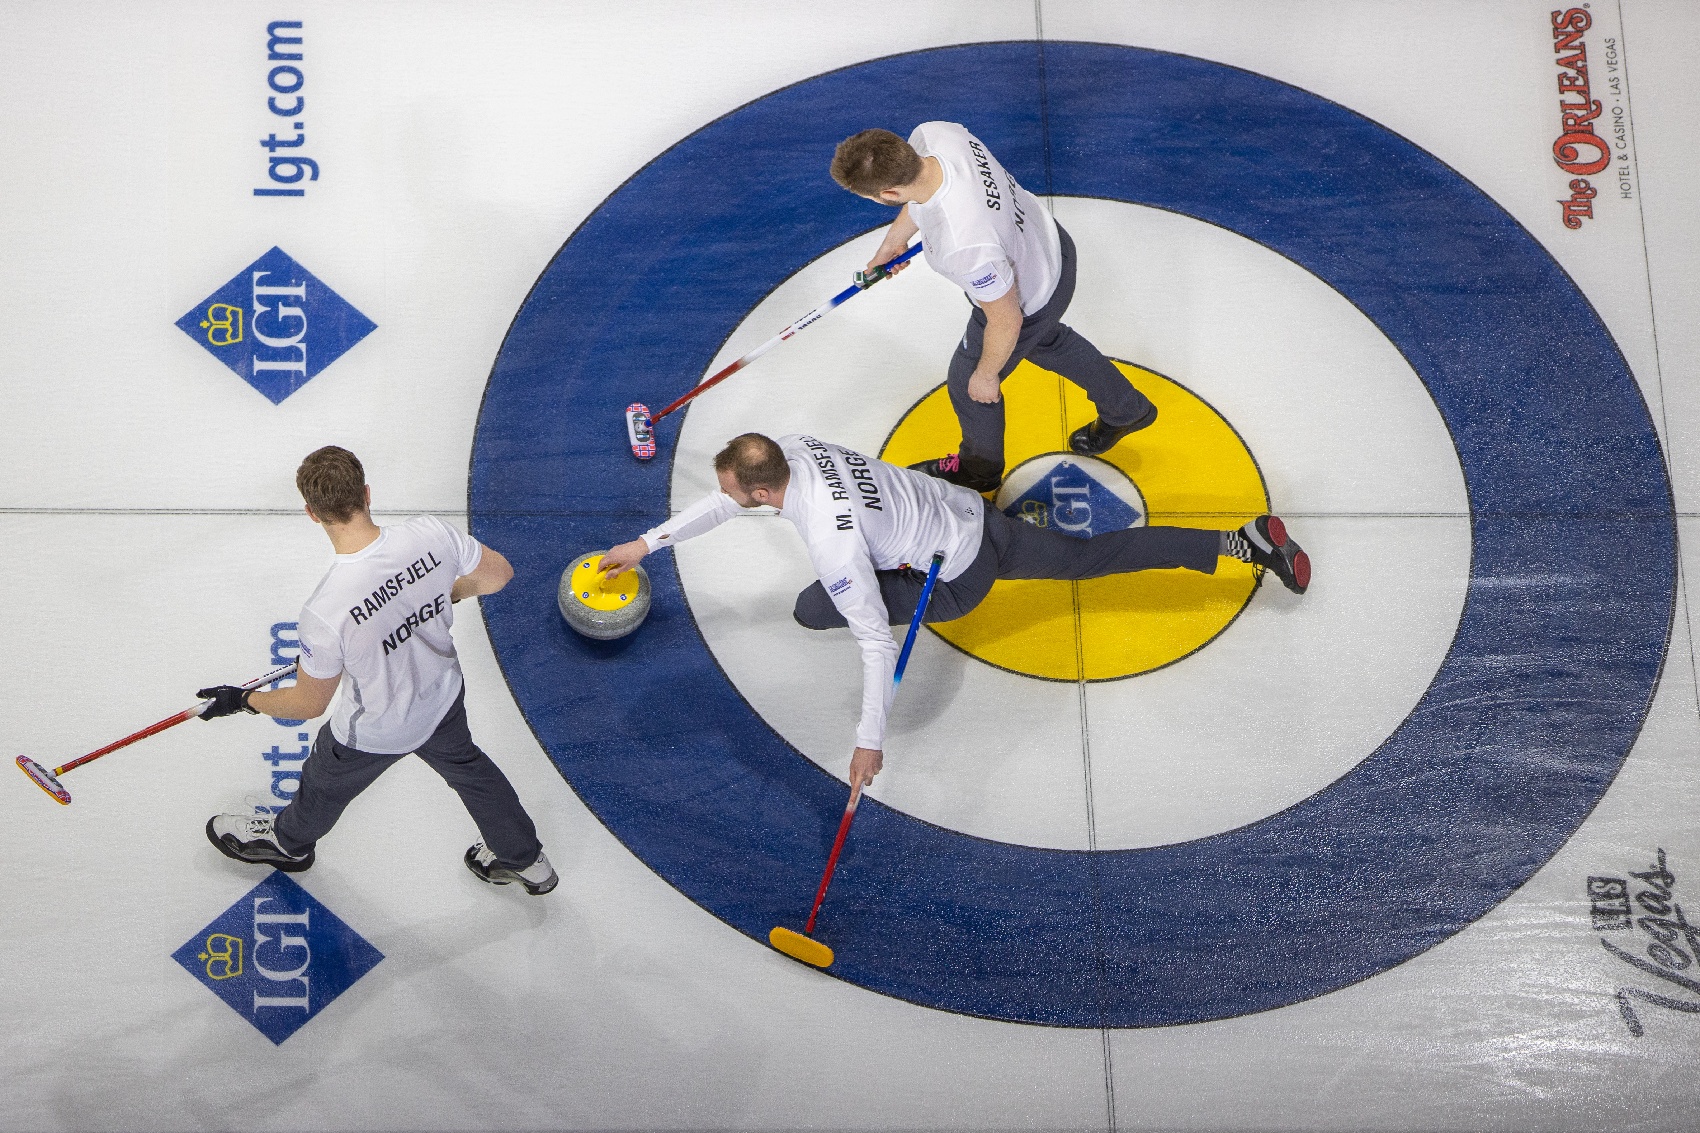 Norwegian National Curling Team